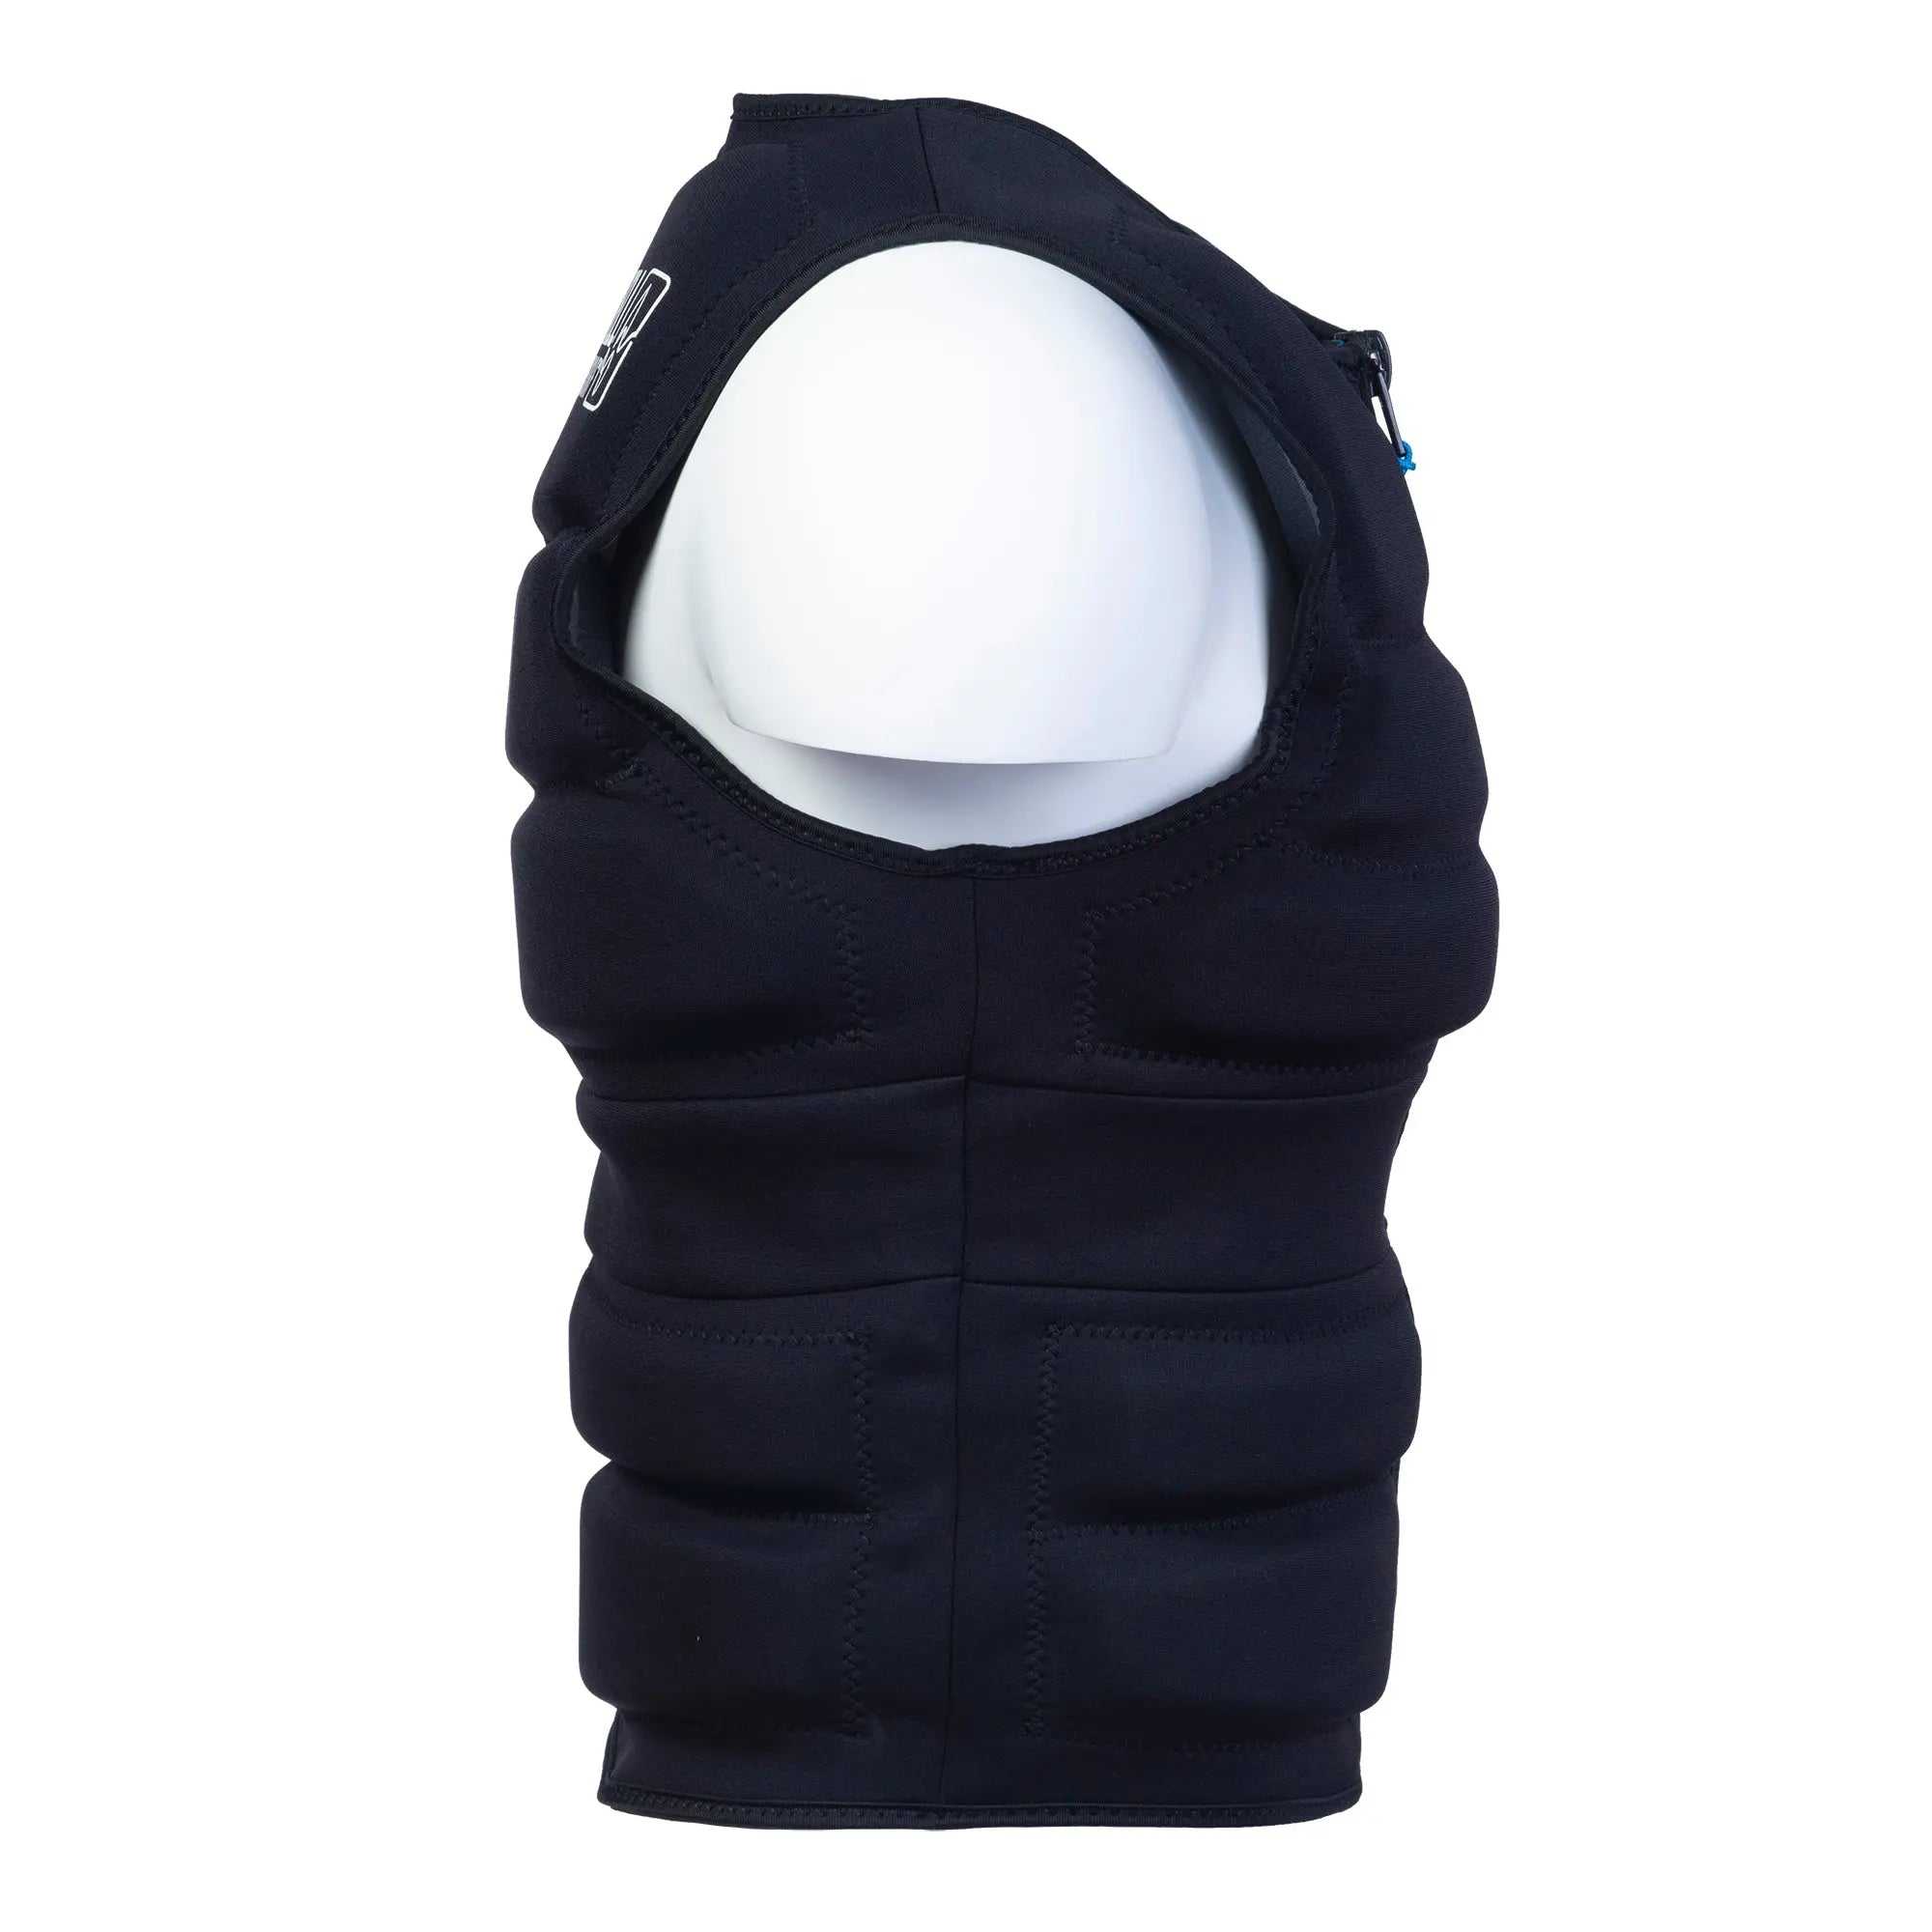 SWELL Wakesurf Vest - Men's Black - Ultimate Comfort Neoprene Jacket - WEBSITE EXCLUSIVE COLOR! SWELL Wakesurf